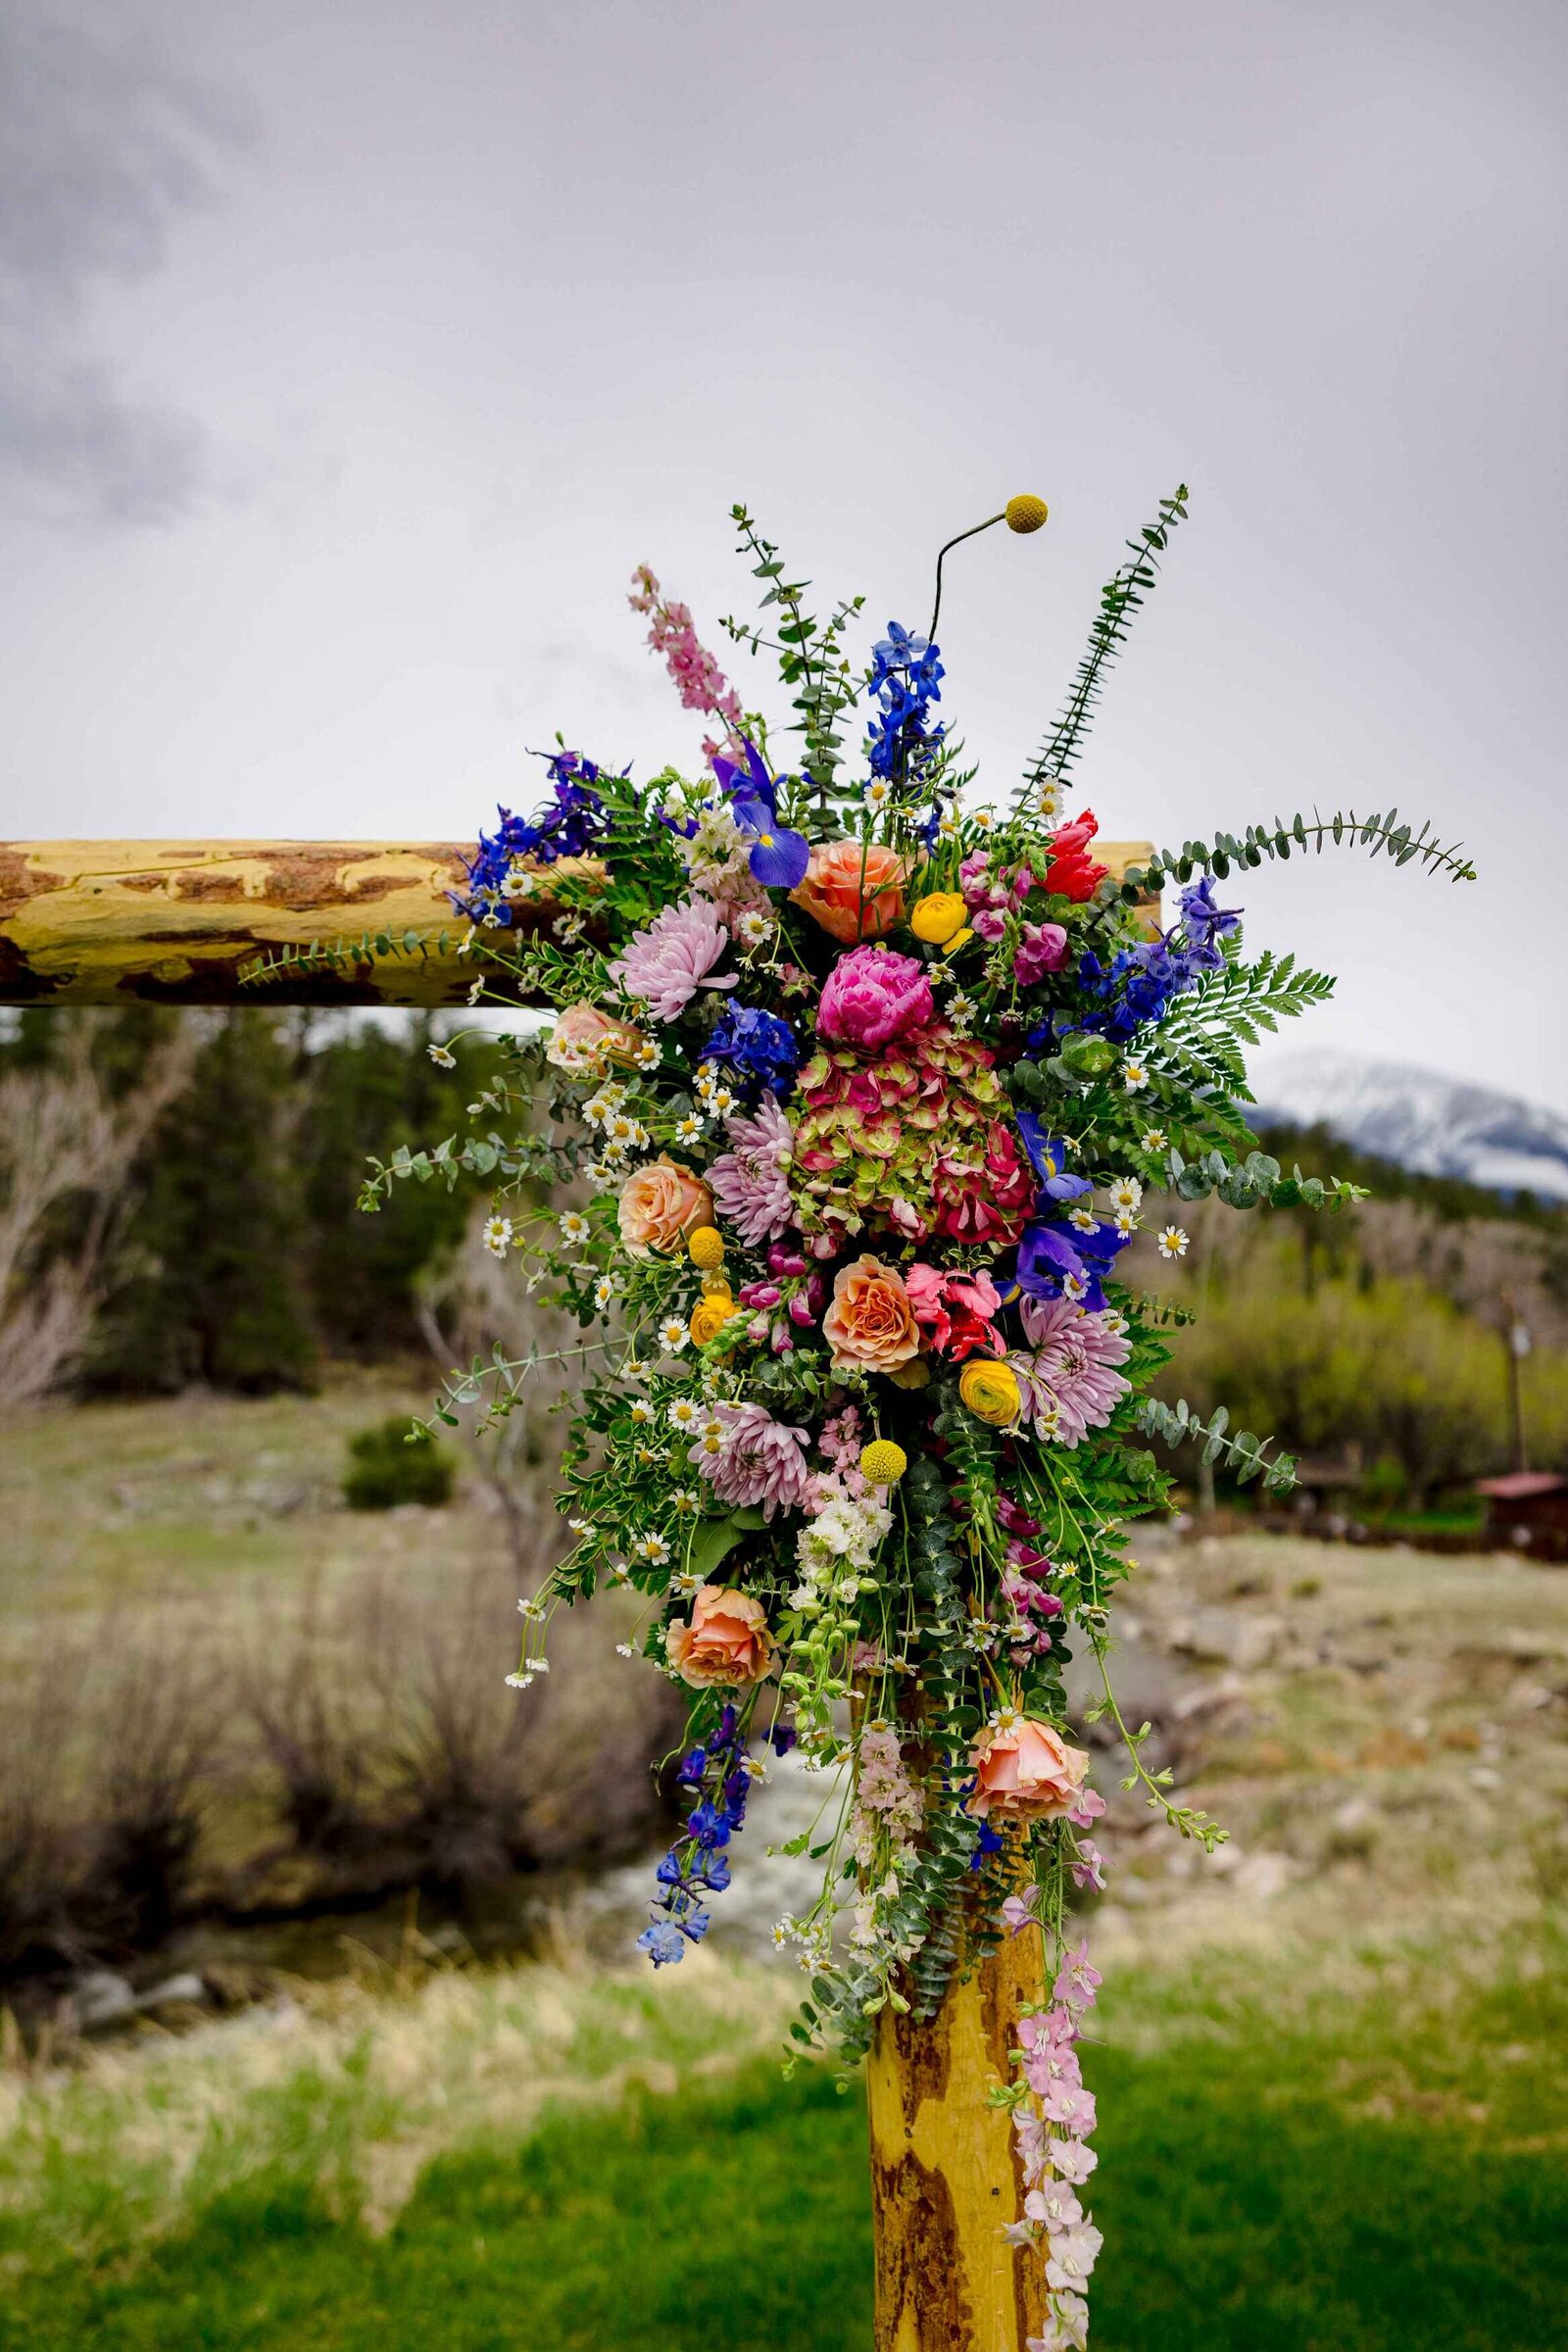 A large flower arrangement on a wooden post.